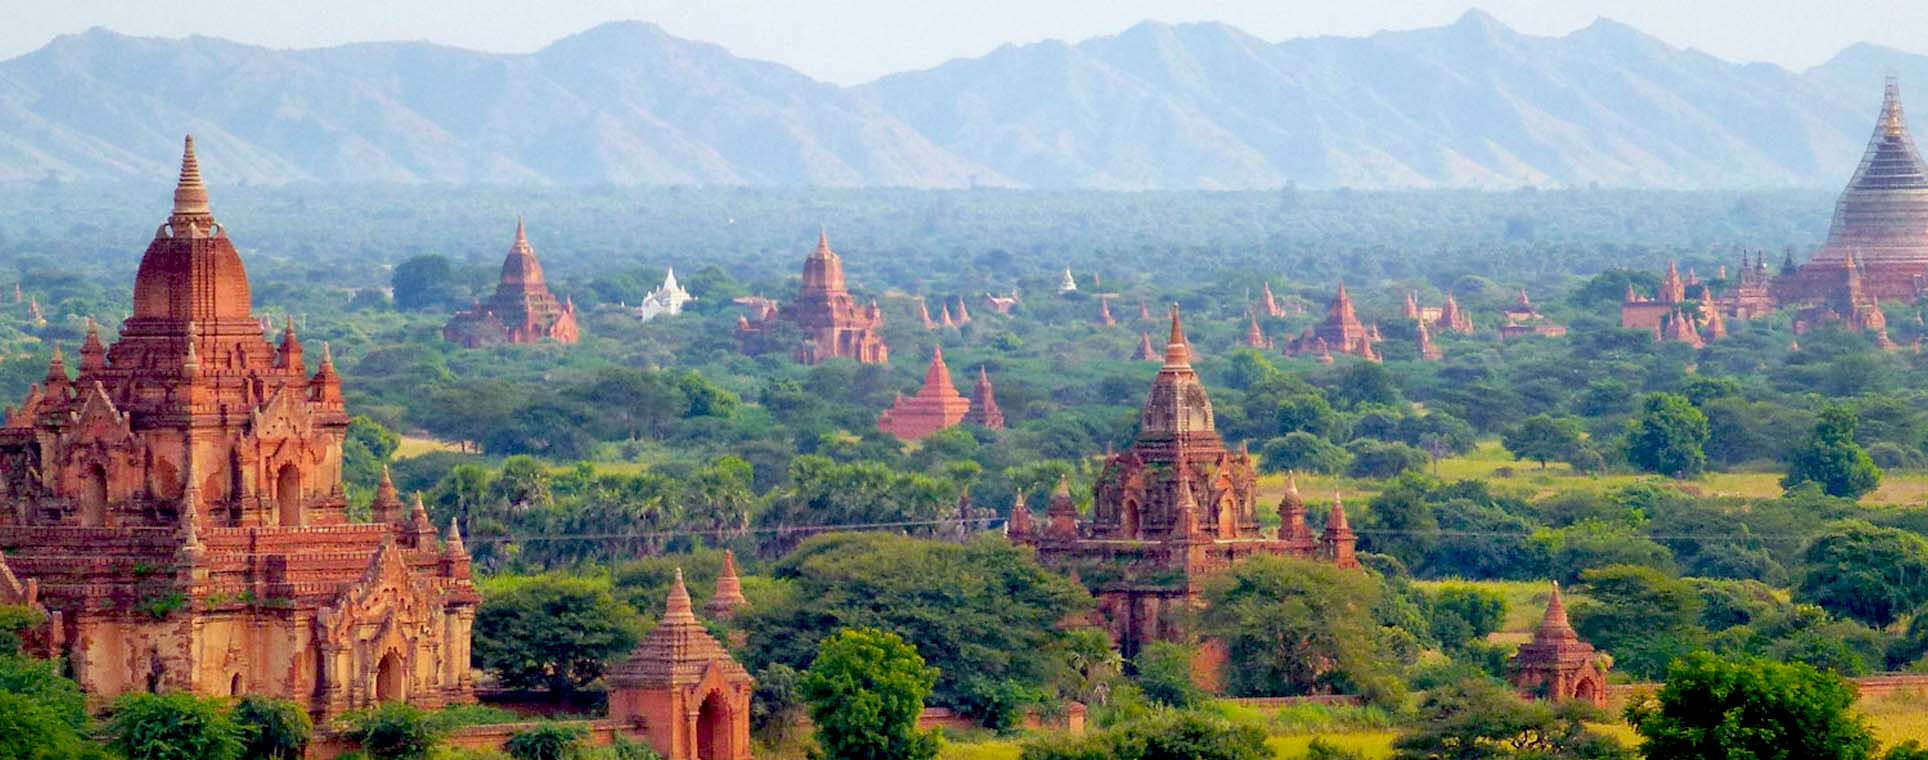 Myanmar Tourist Attractions